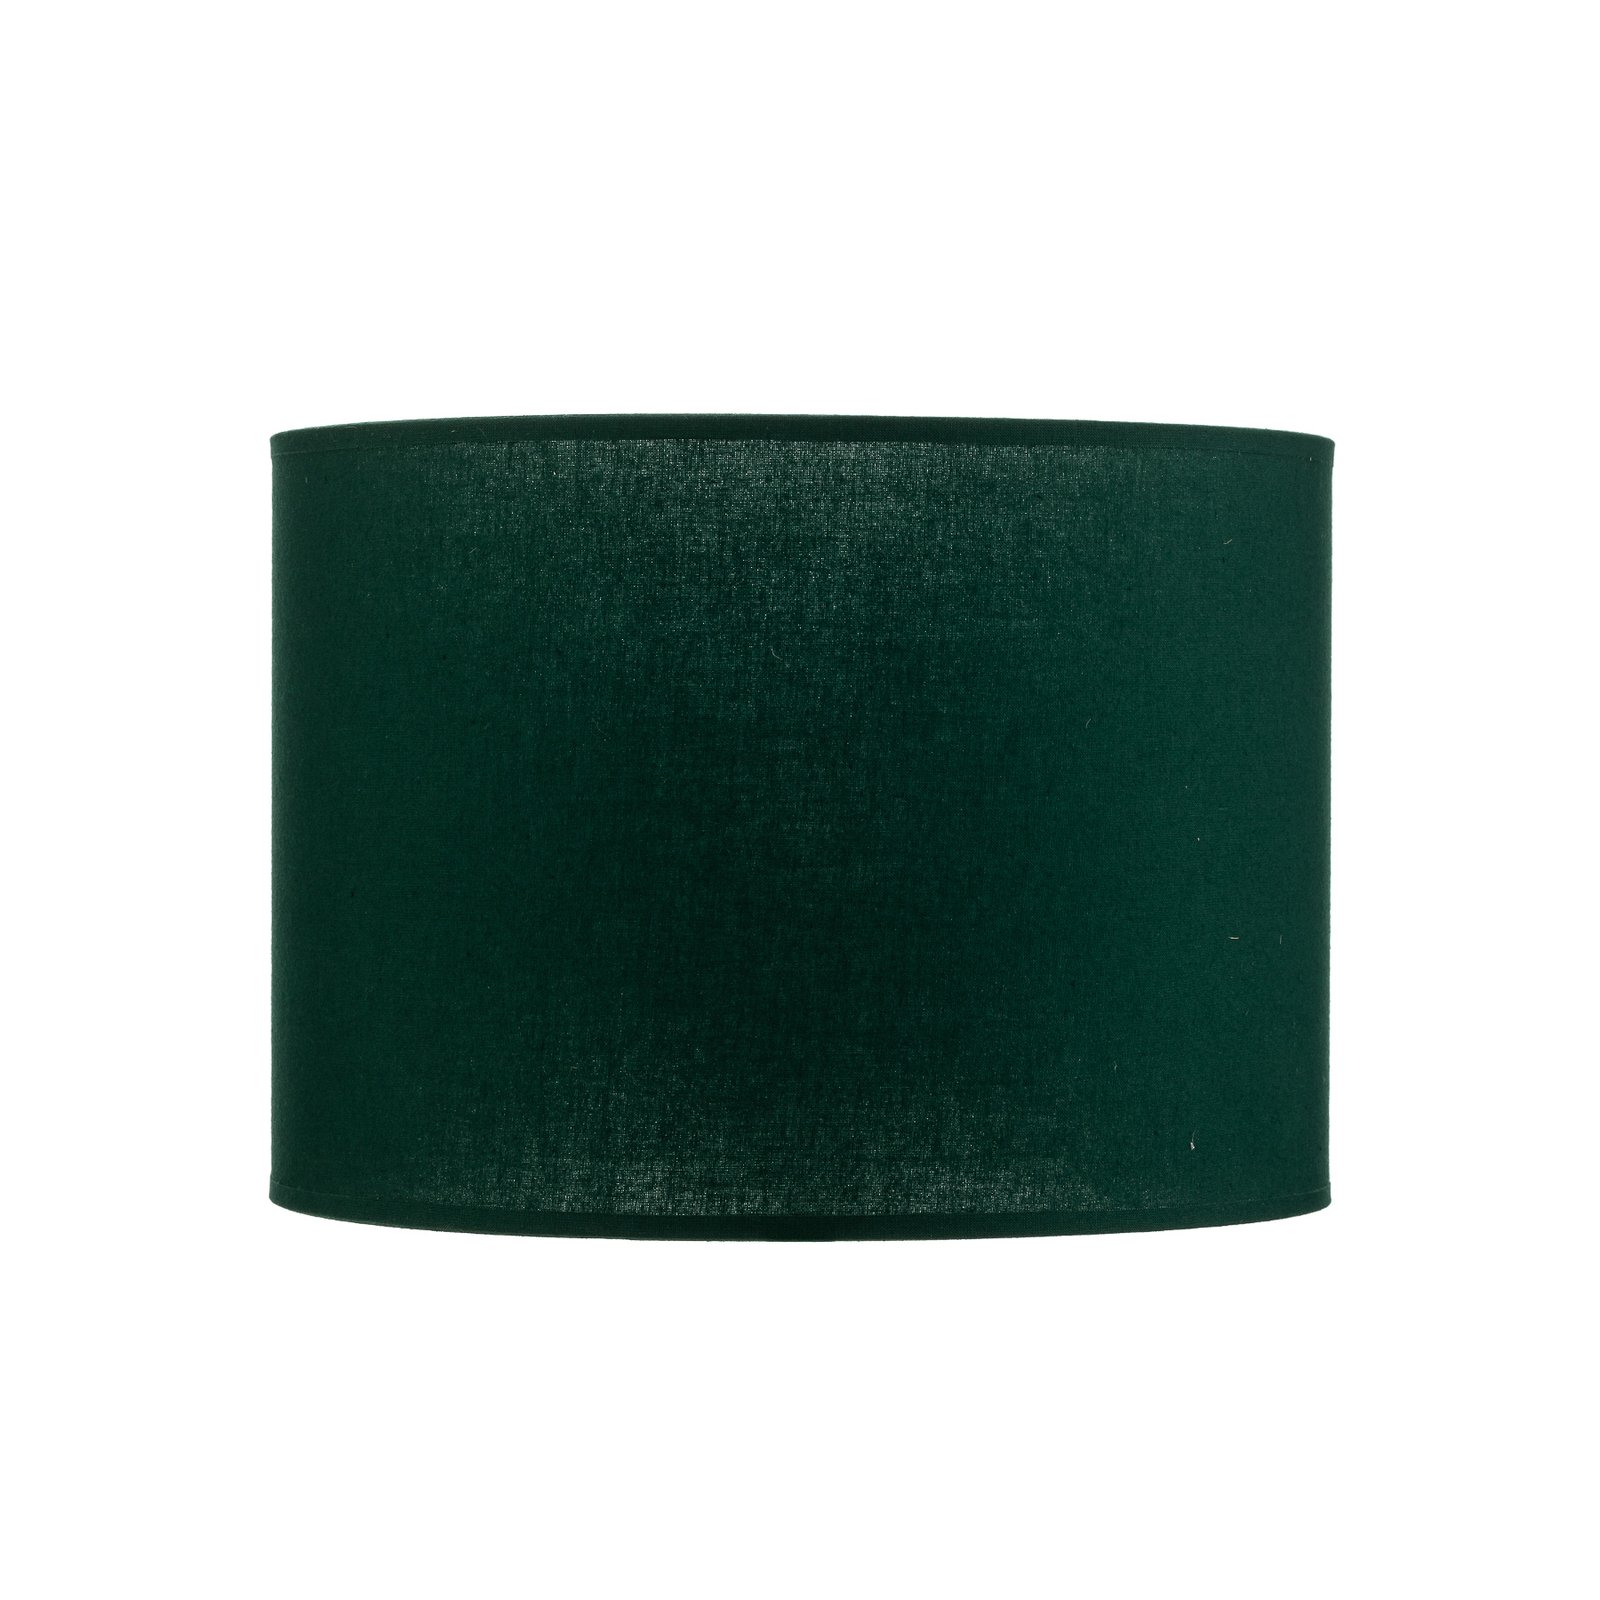 Pantalla Roller, verde, Ø 25 cm, altura 18 cm